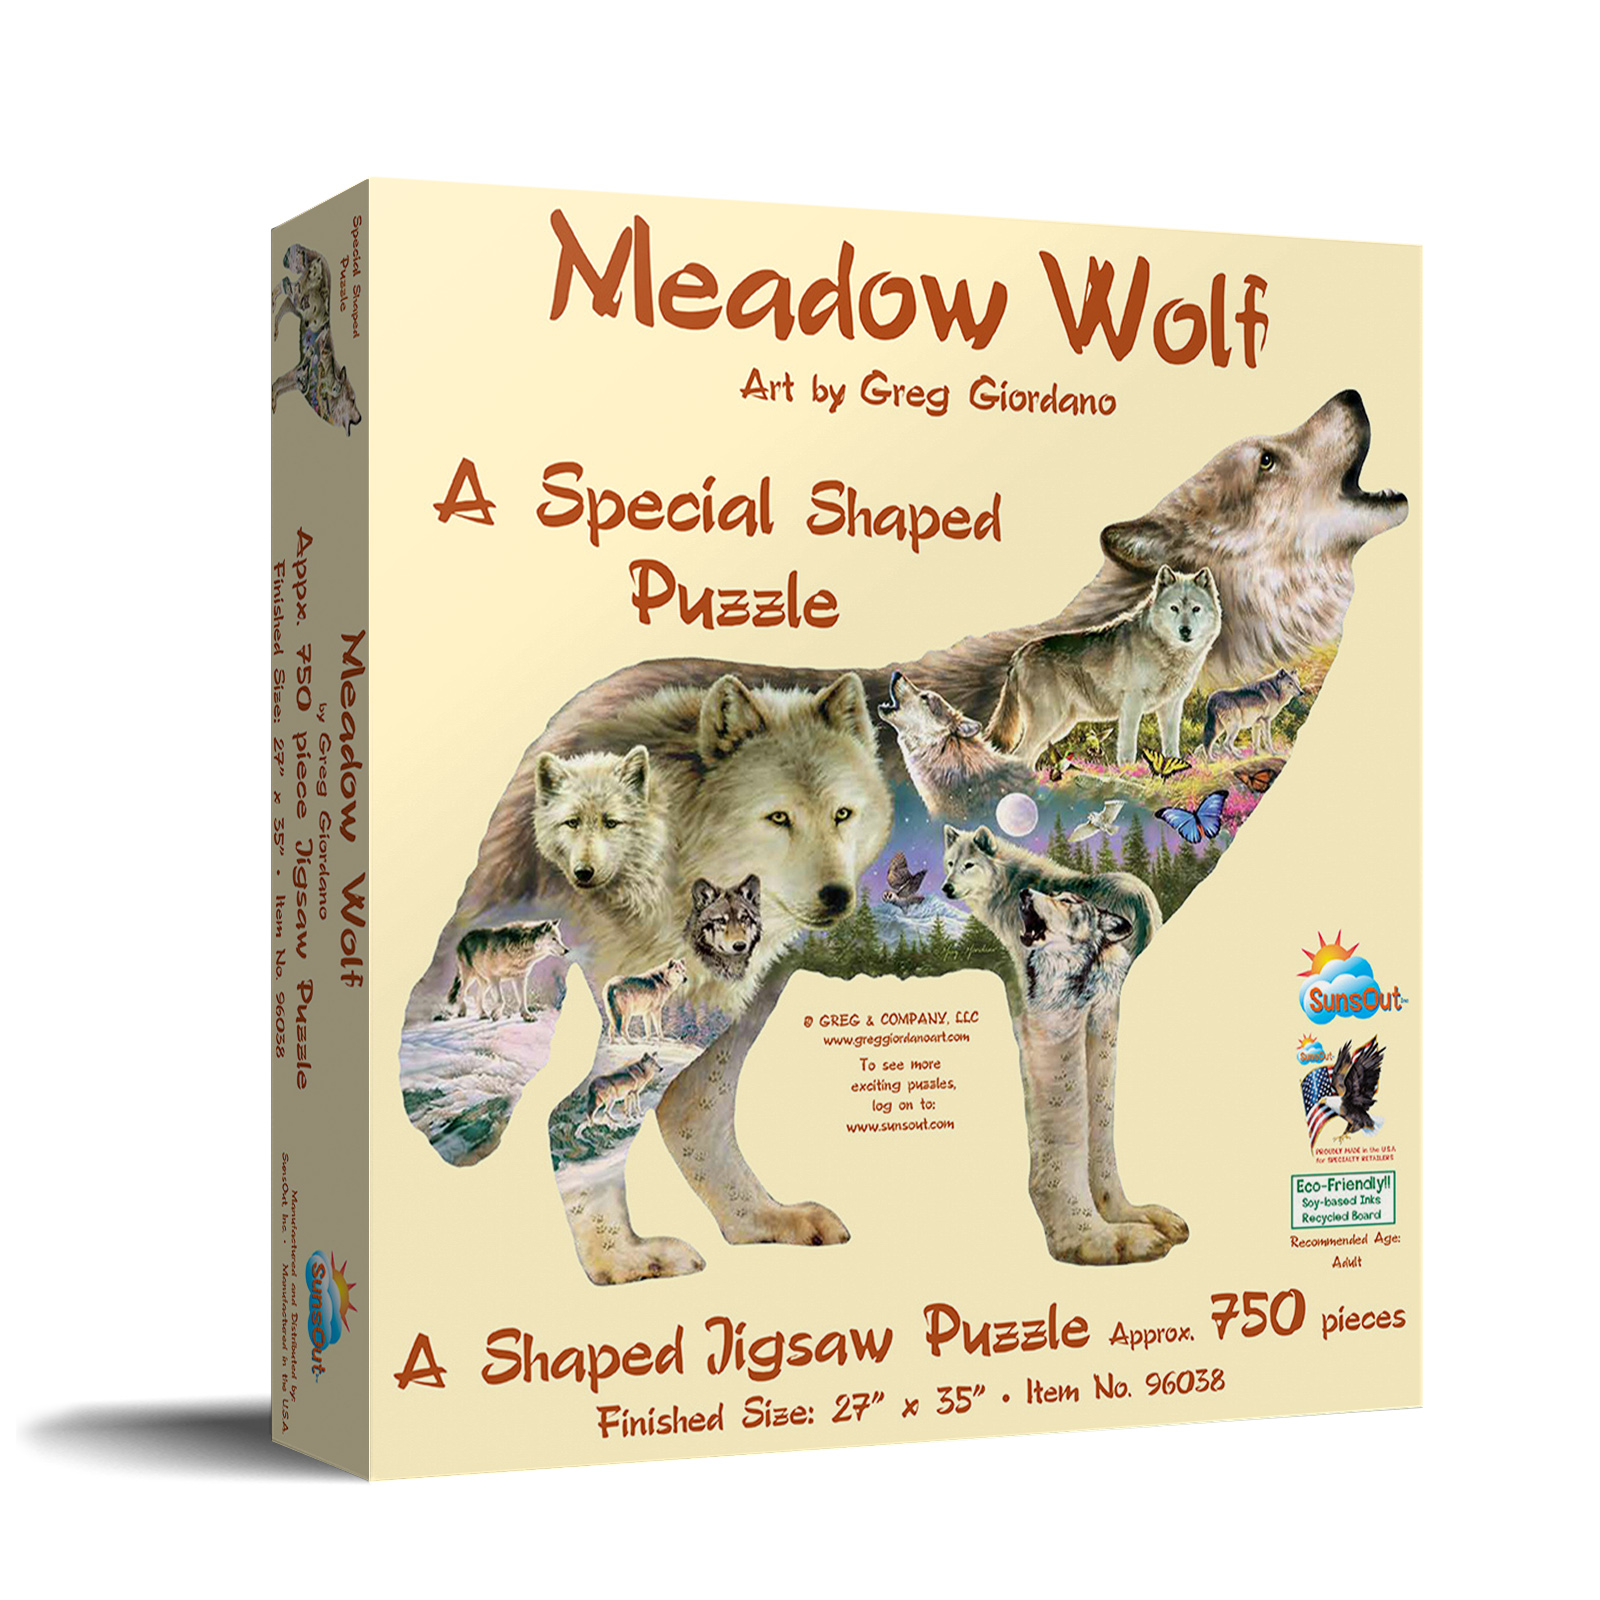 Meadow Wolf